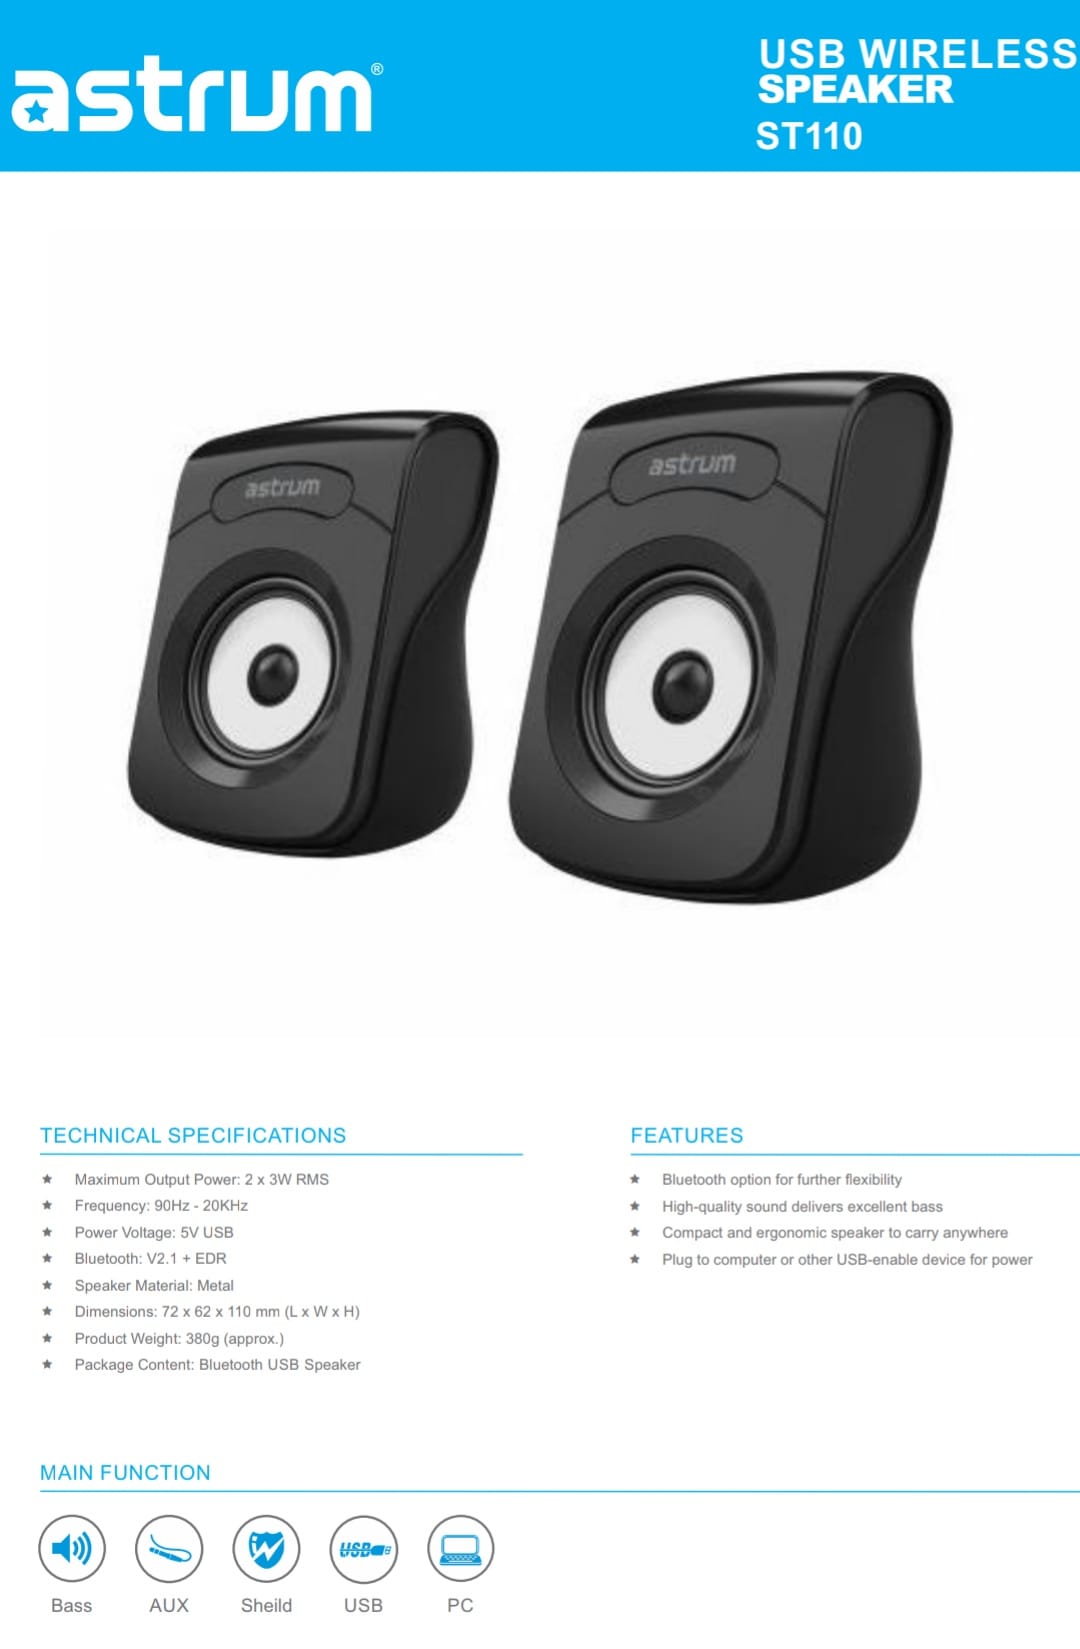 Astrum USBWireless Speakers ST110